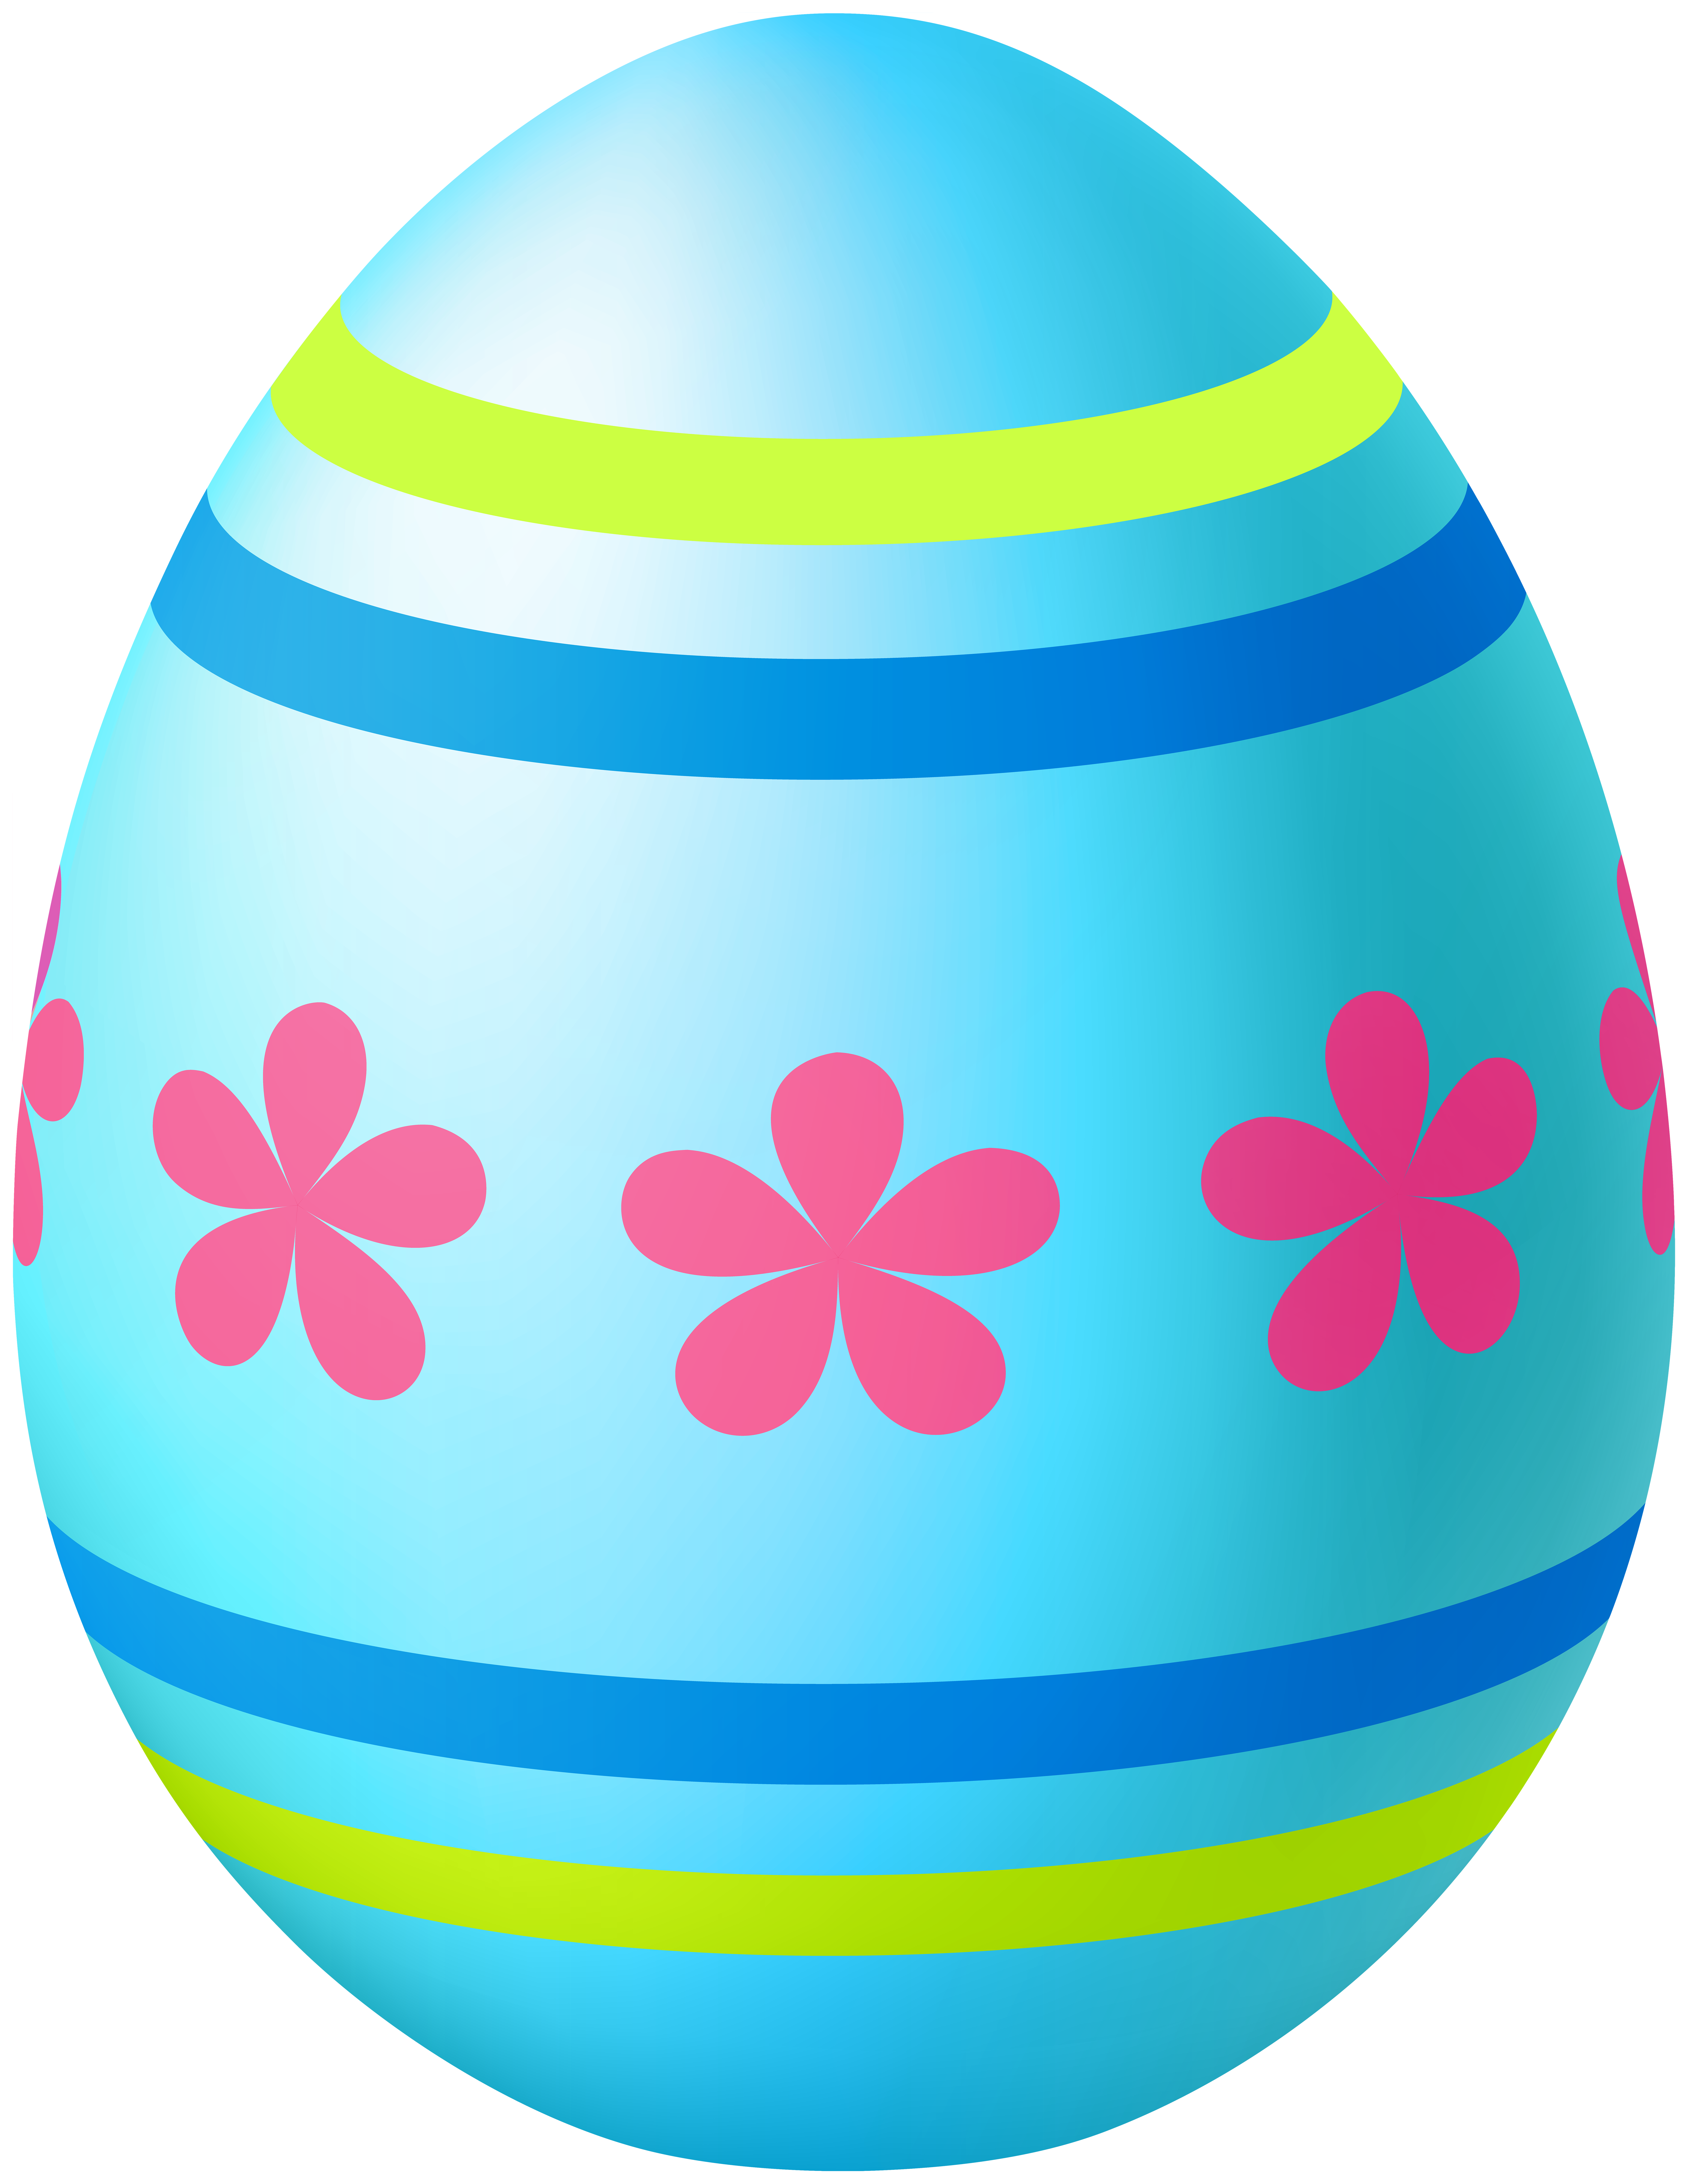 Easter Egg clipart. Free download transparent .PNG